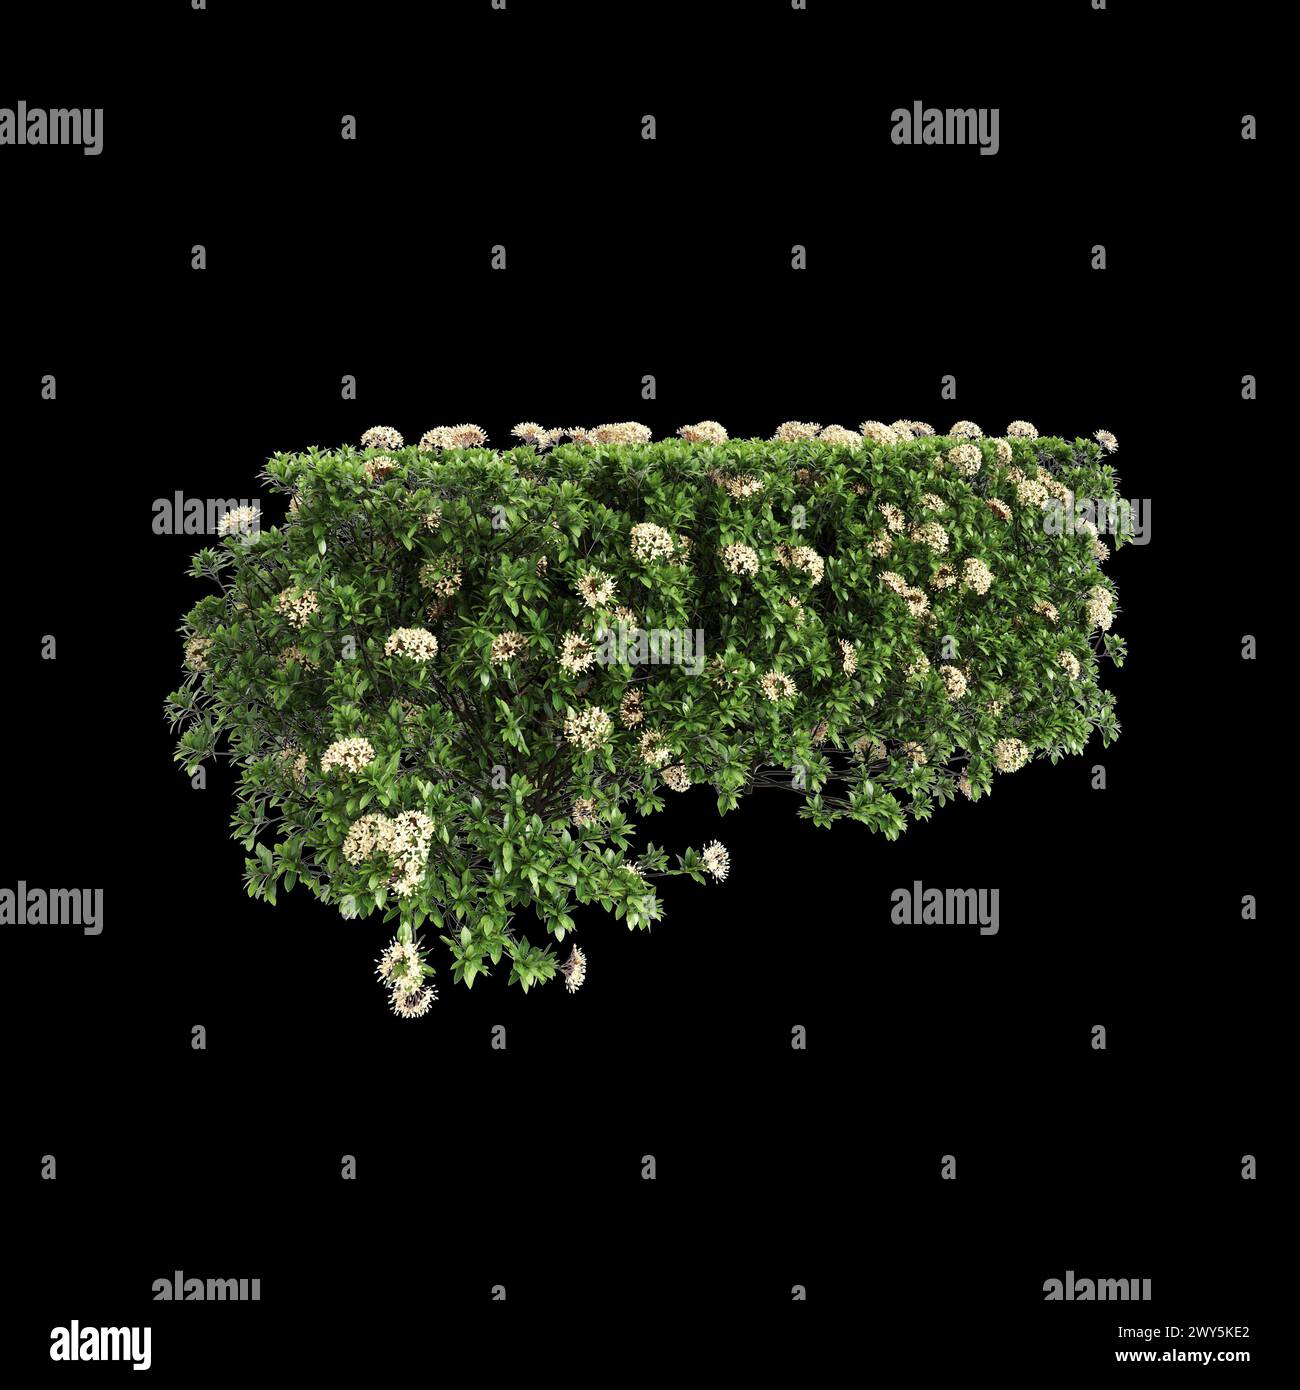 3d illustration of Ixora taiwanensis treeline isolated on black background, perspective Stock Photo